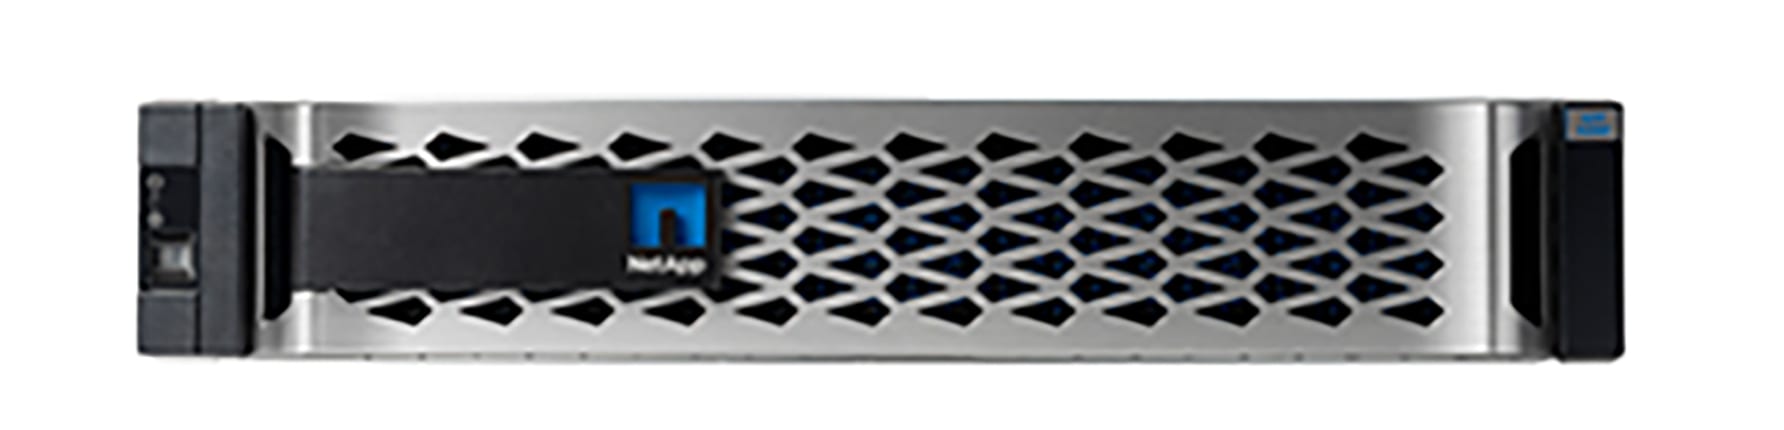 NetApp AFF C190 Flash Array Storage System with 12x960GB NVMe RJ-45 Solid S